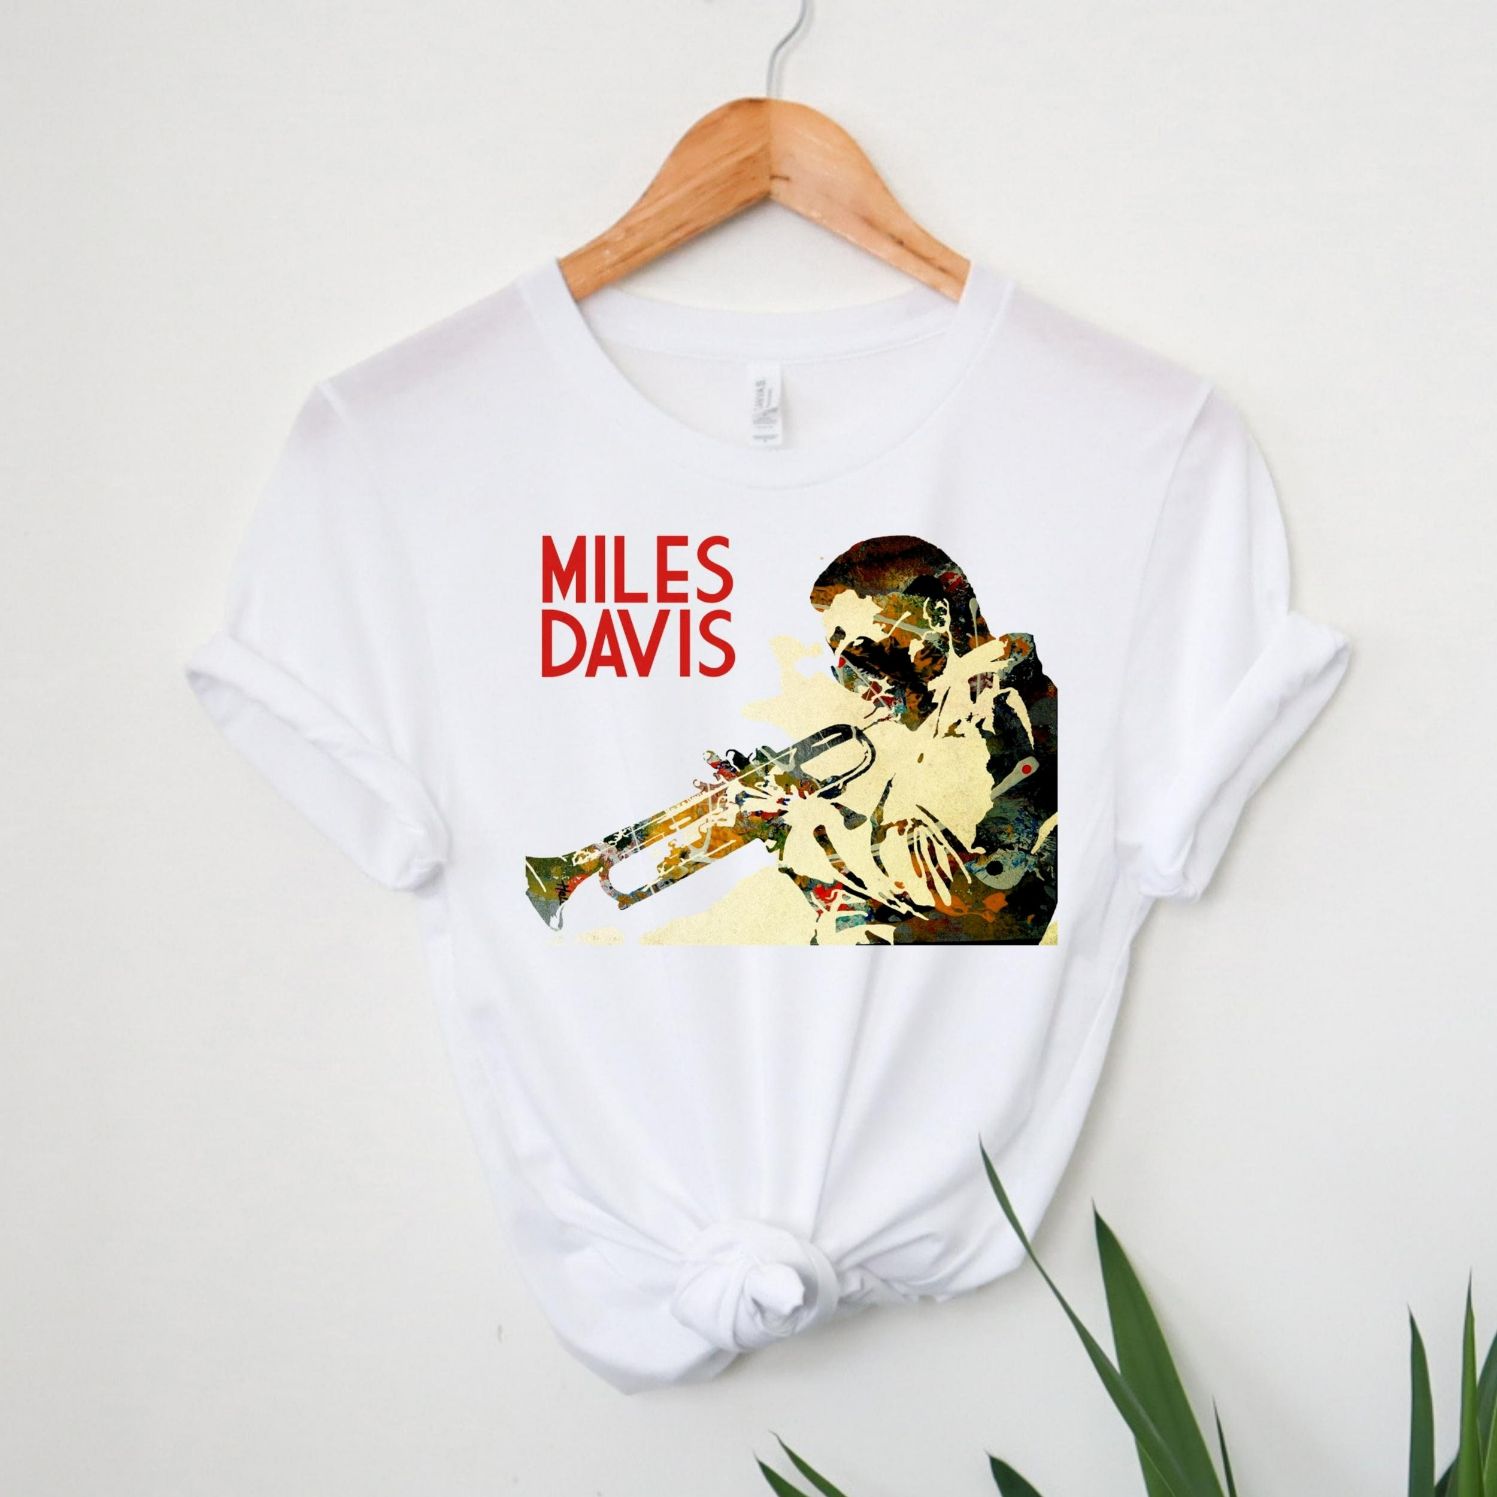 MILES DAVIS Shirt